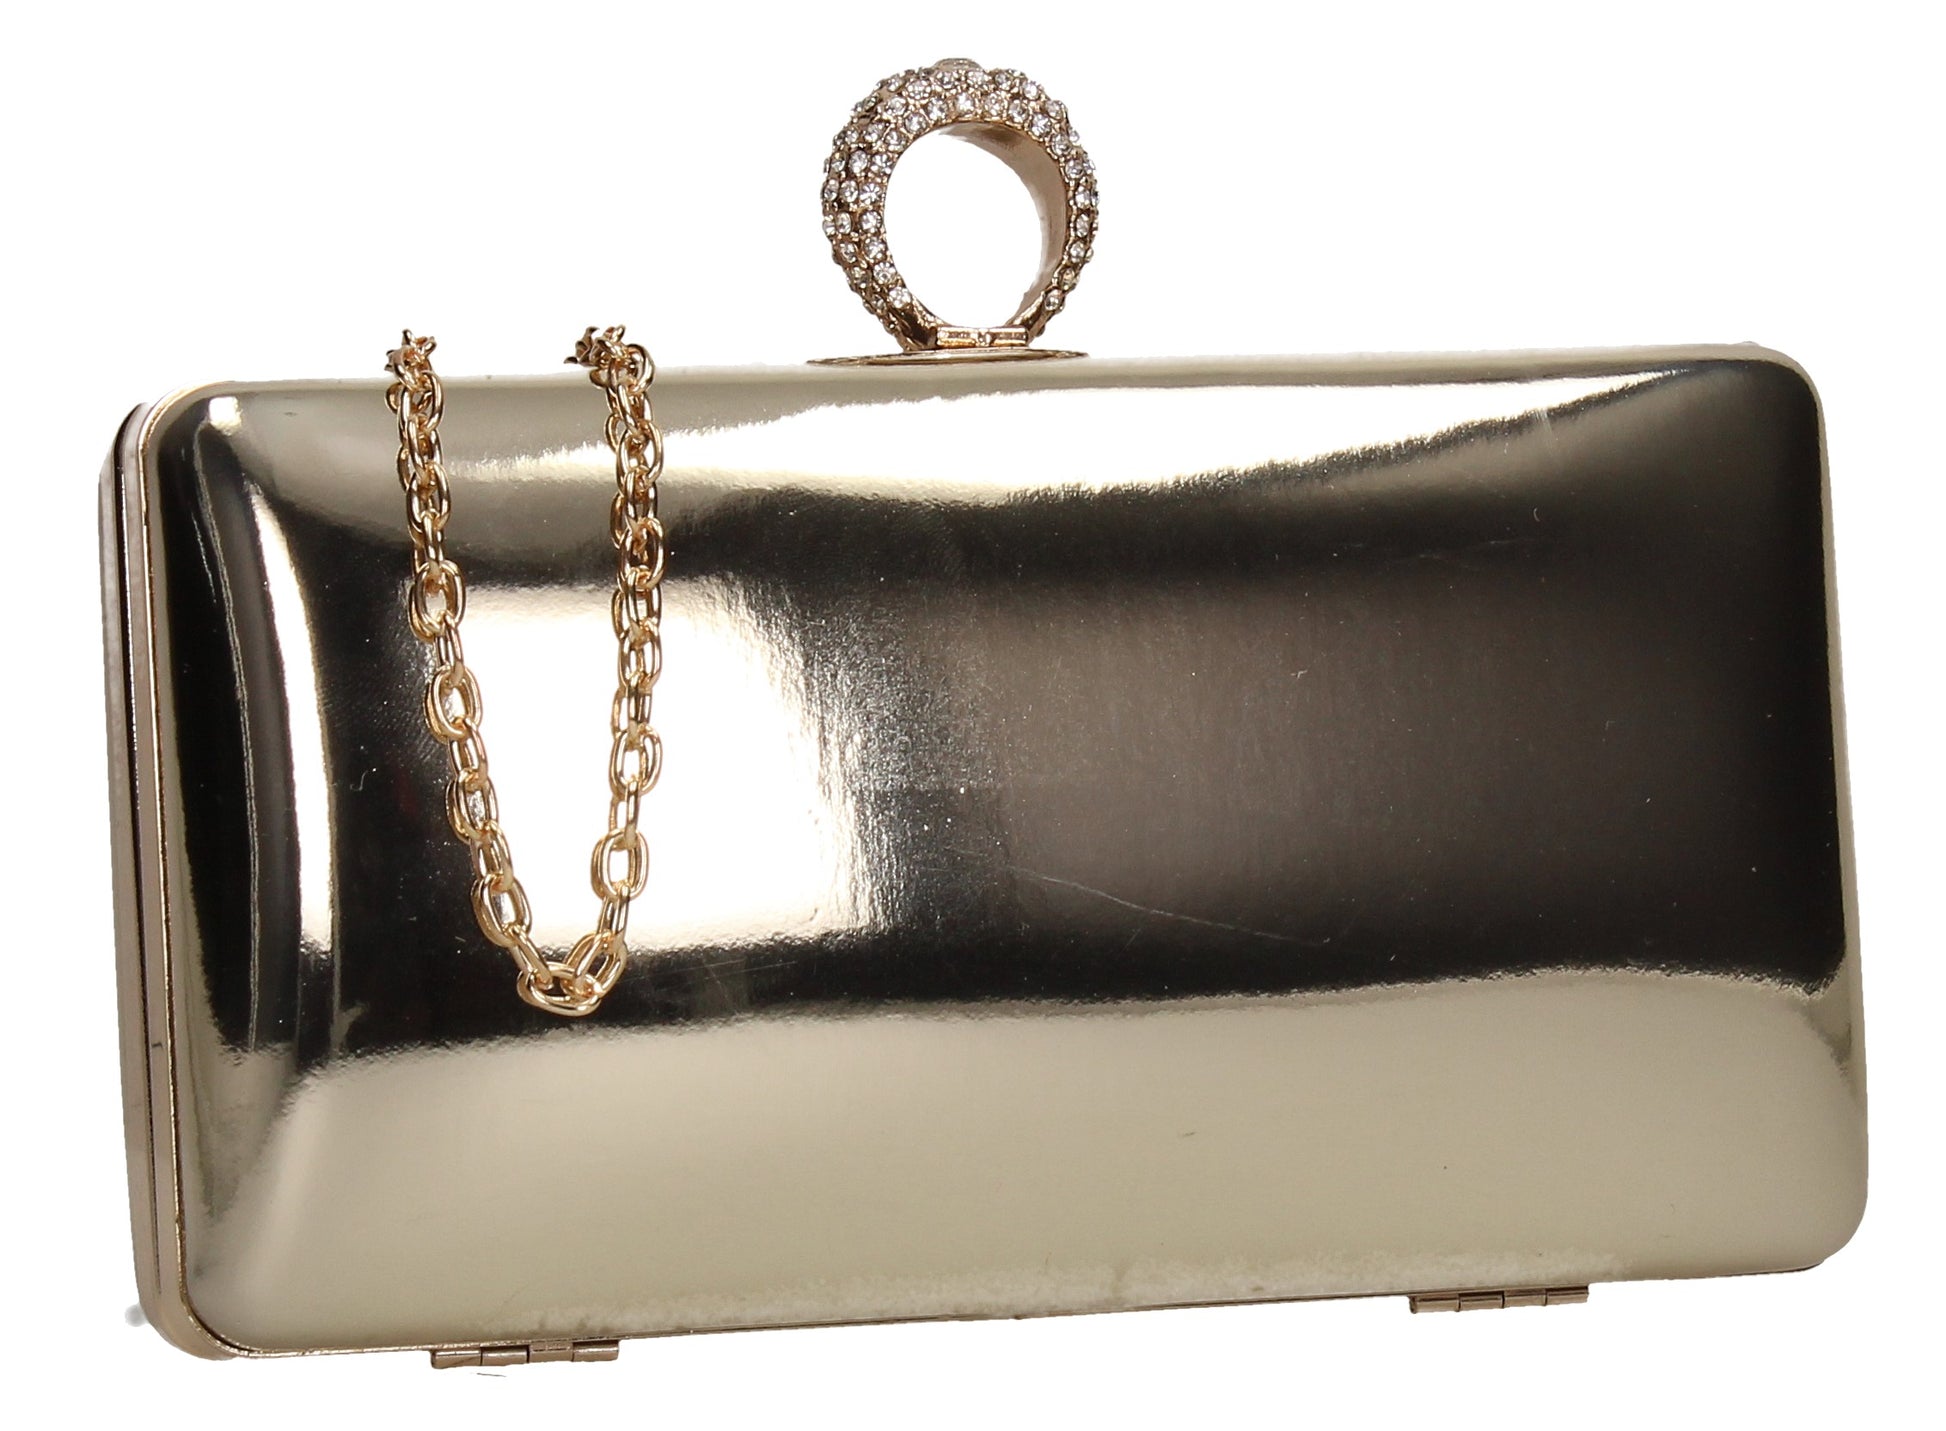 SWANKYSWANS Lyla Patent Clutch Bag Gold Cute Cheap Clutch Bag For Weddings School and Work